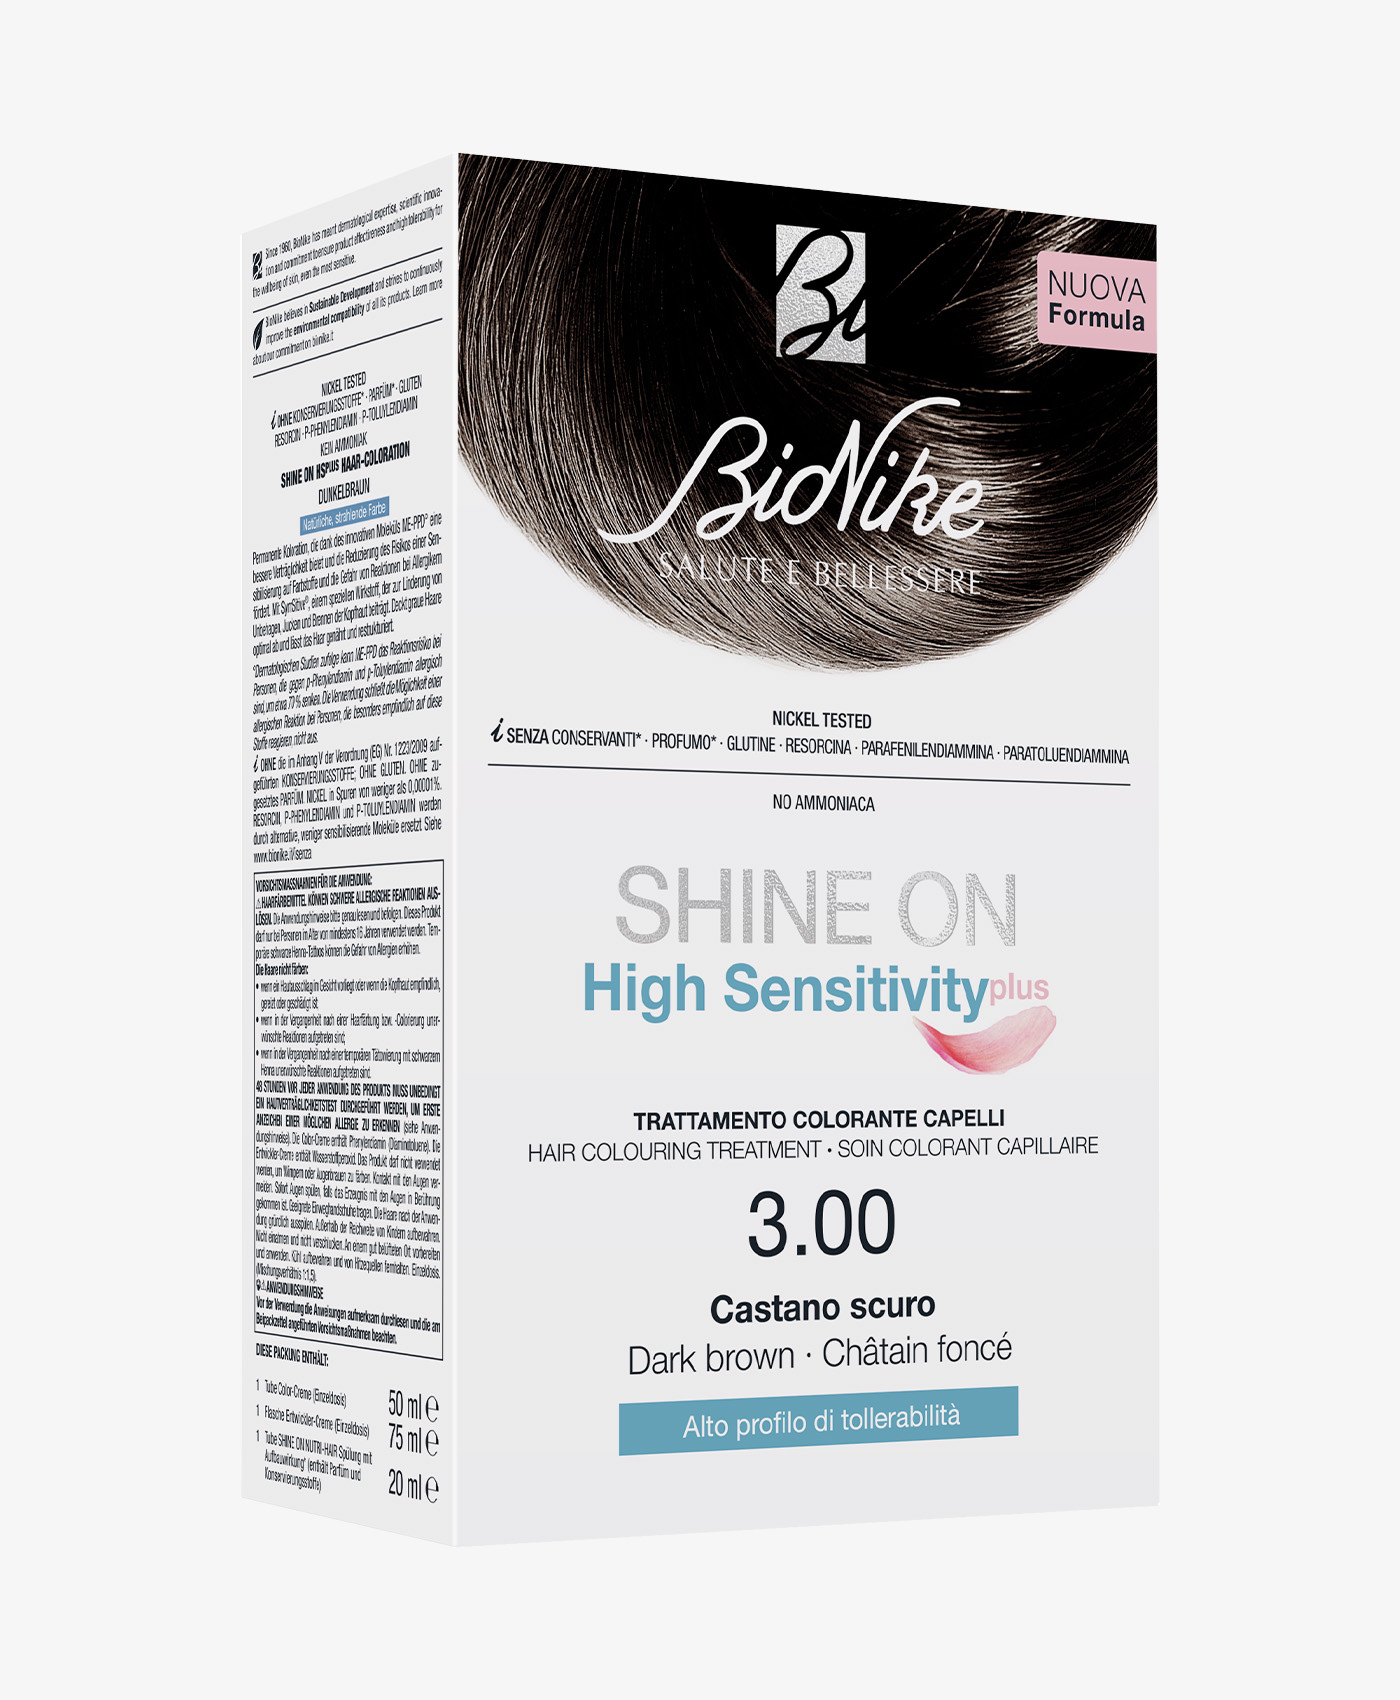 Hair Colouring Treatment - BioNike - Sito Ufficiale